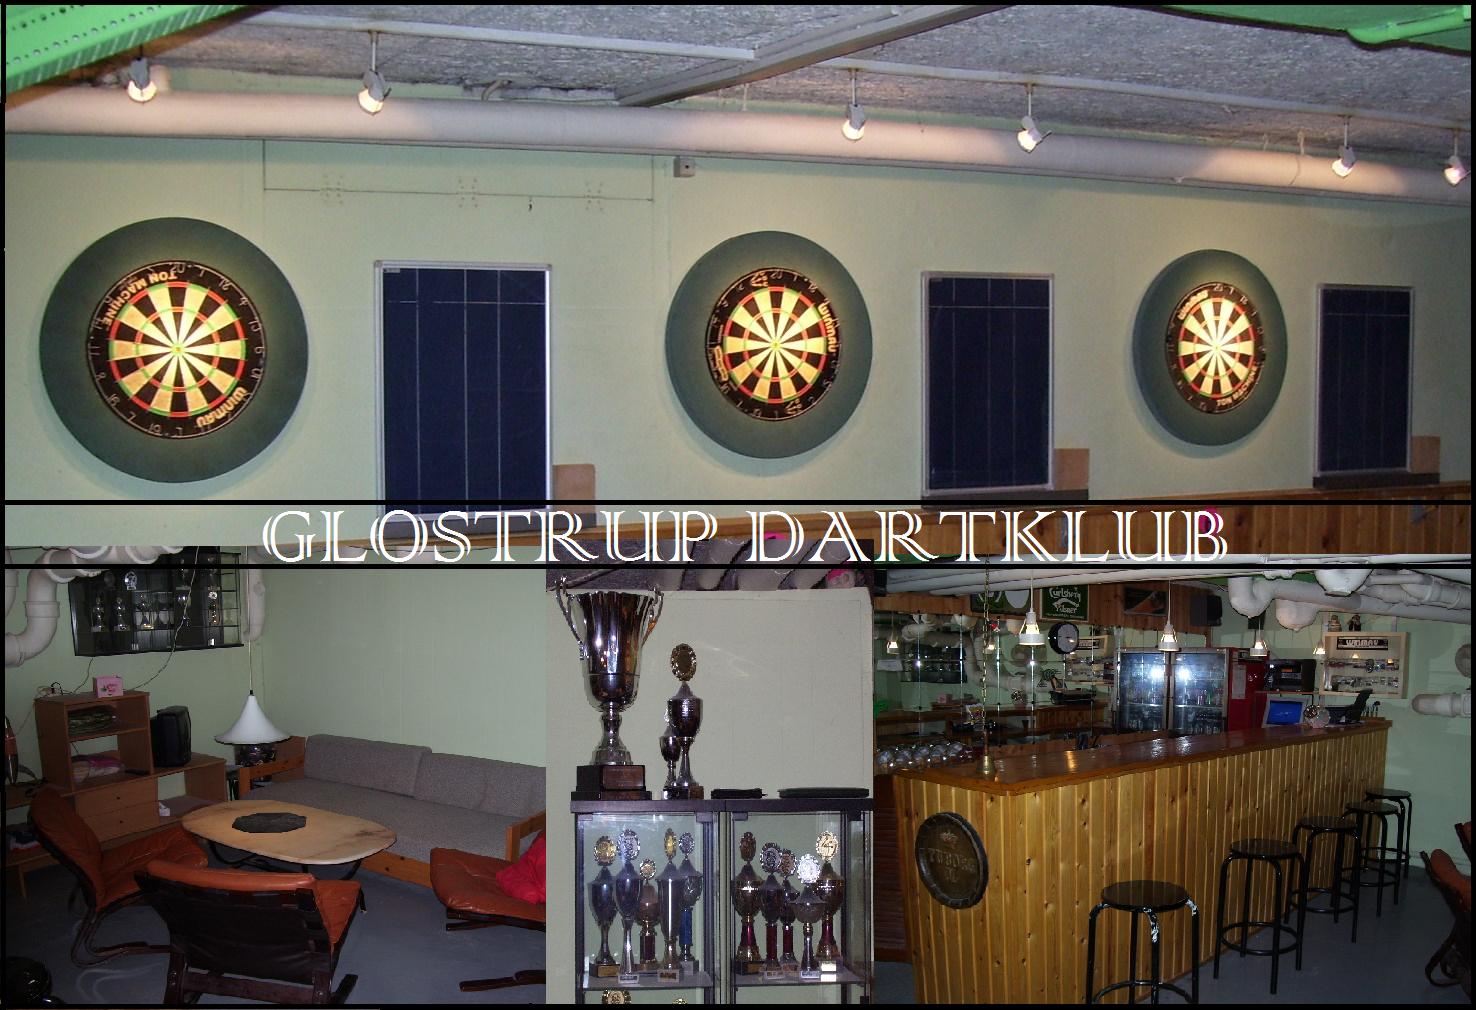 Dartklub - Glostrup Dartklub